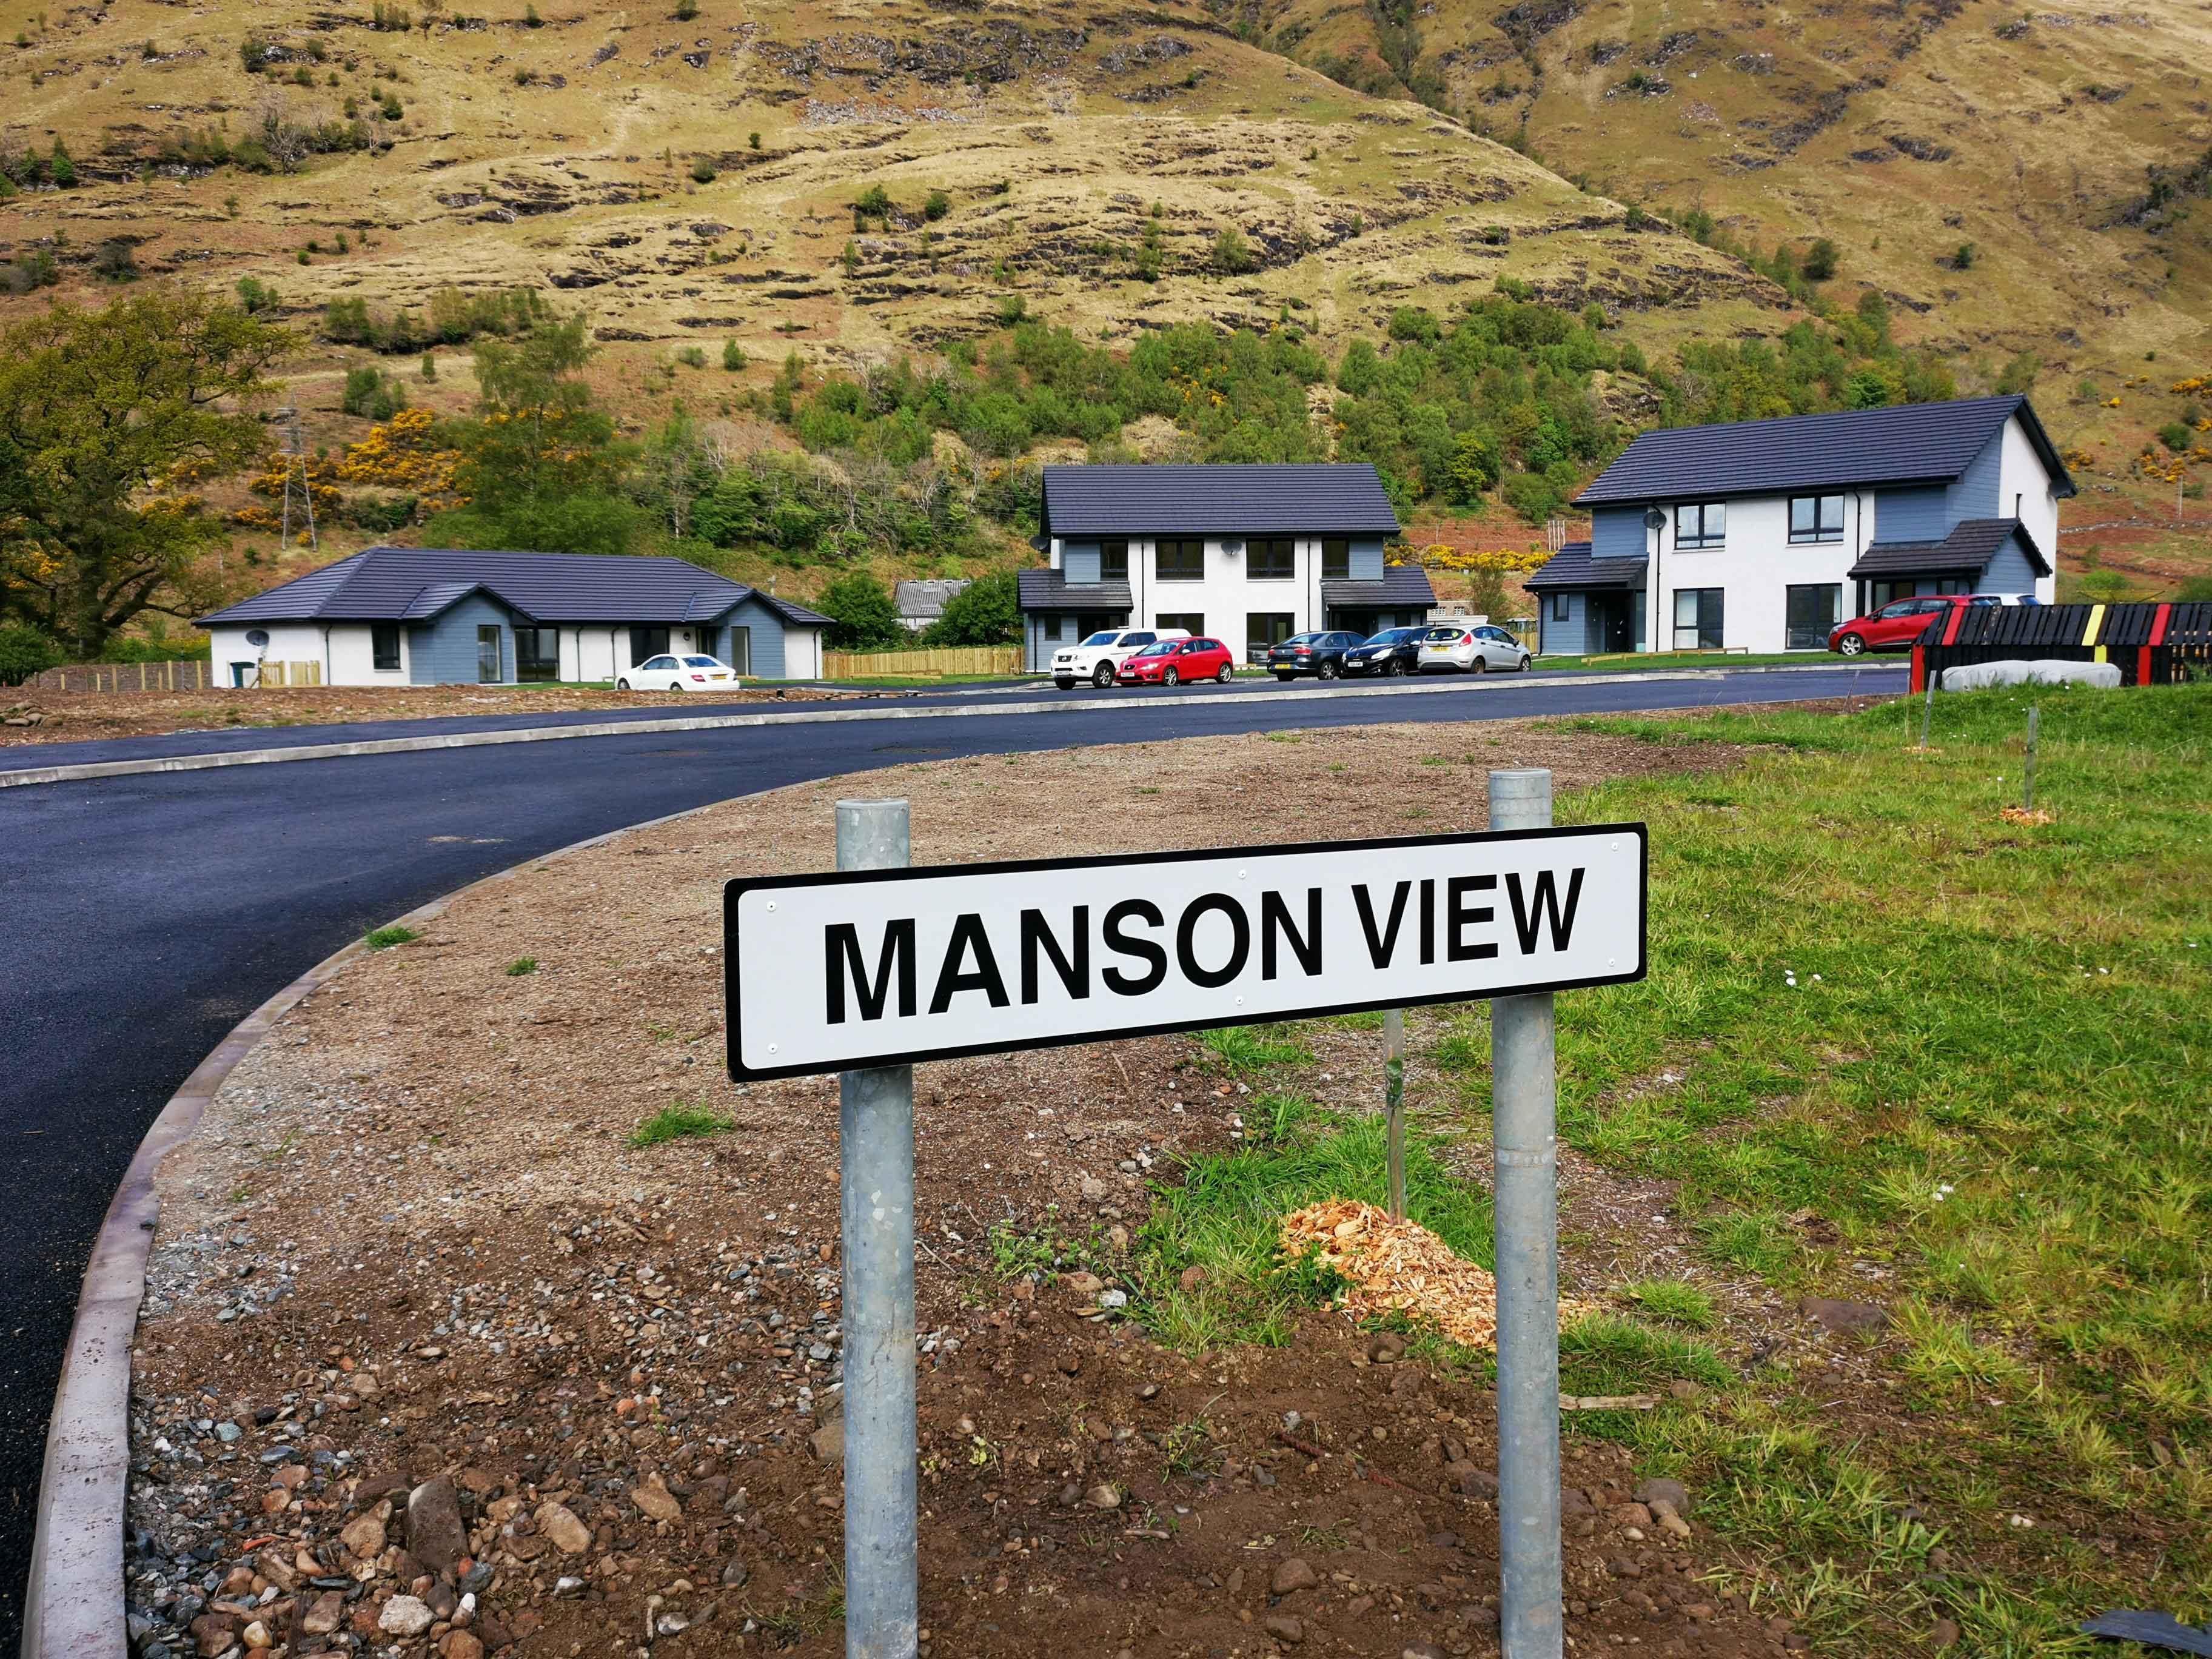 Manson View